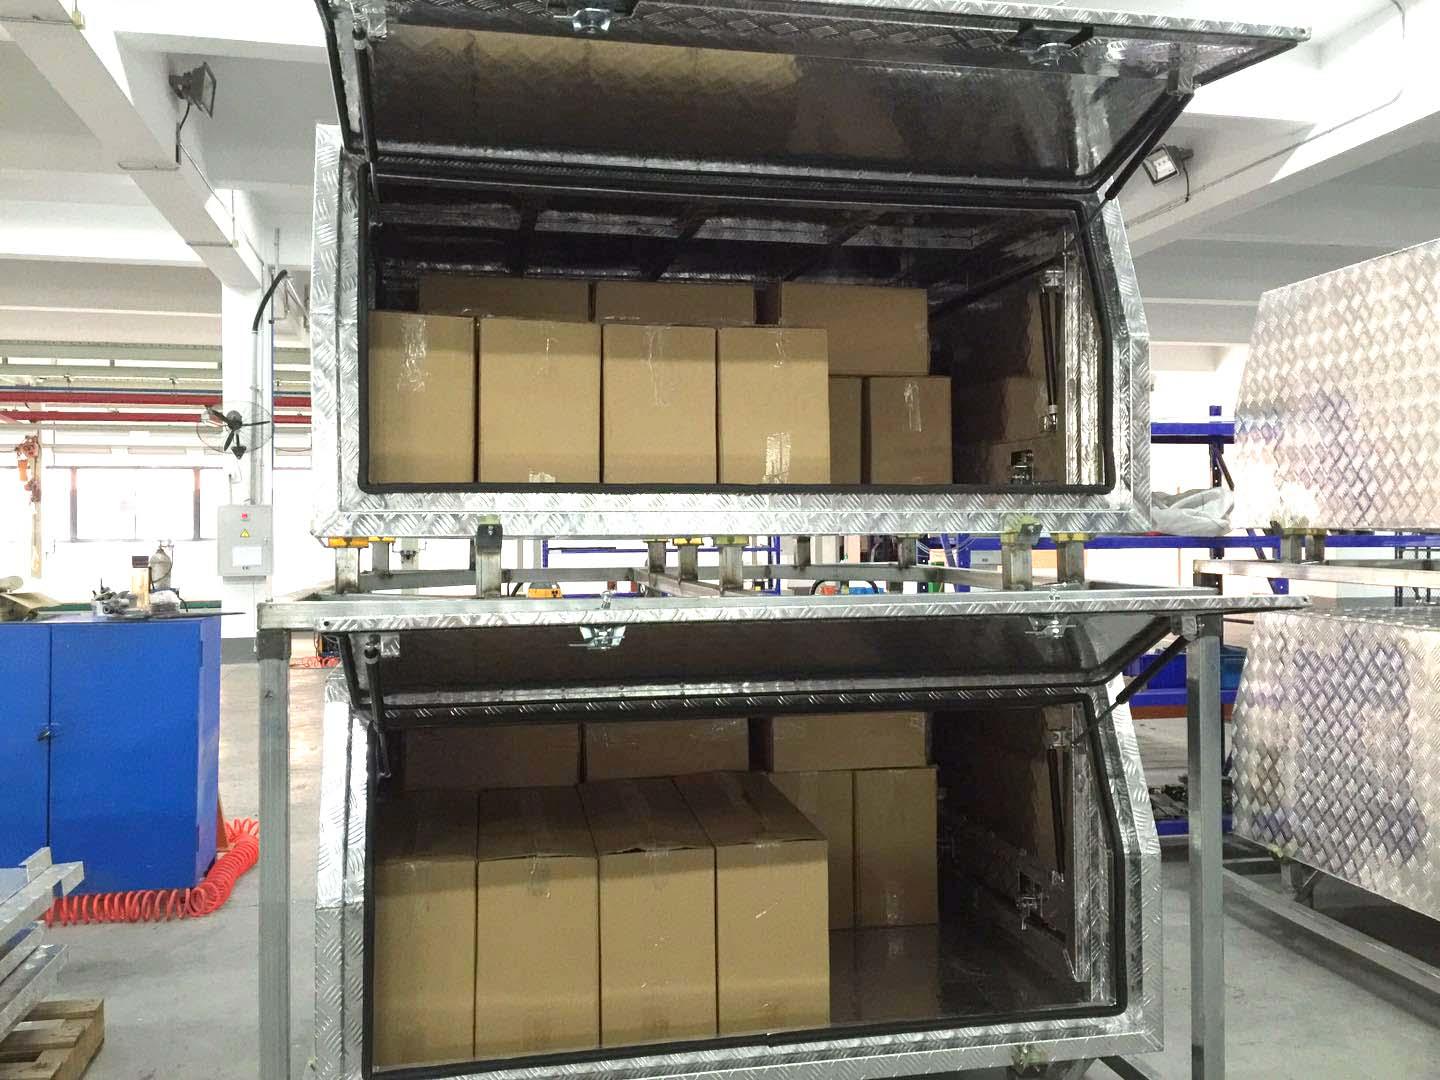 Snowaves Mechanical truck custom aluminium tool boxes for wholesale for boat